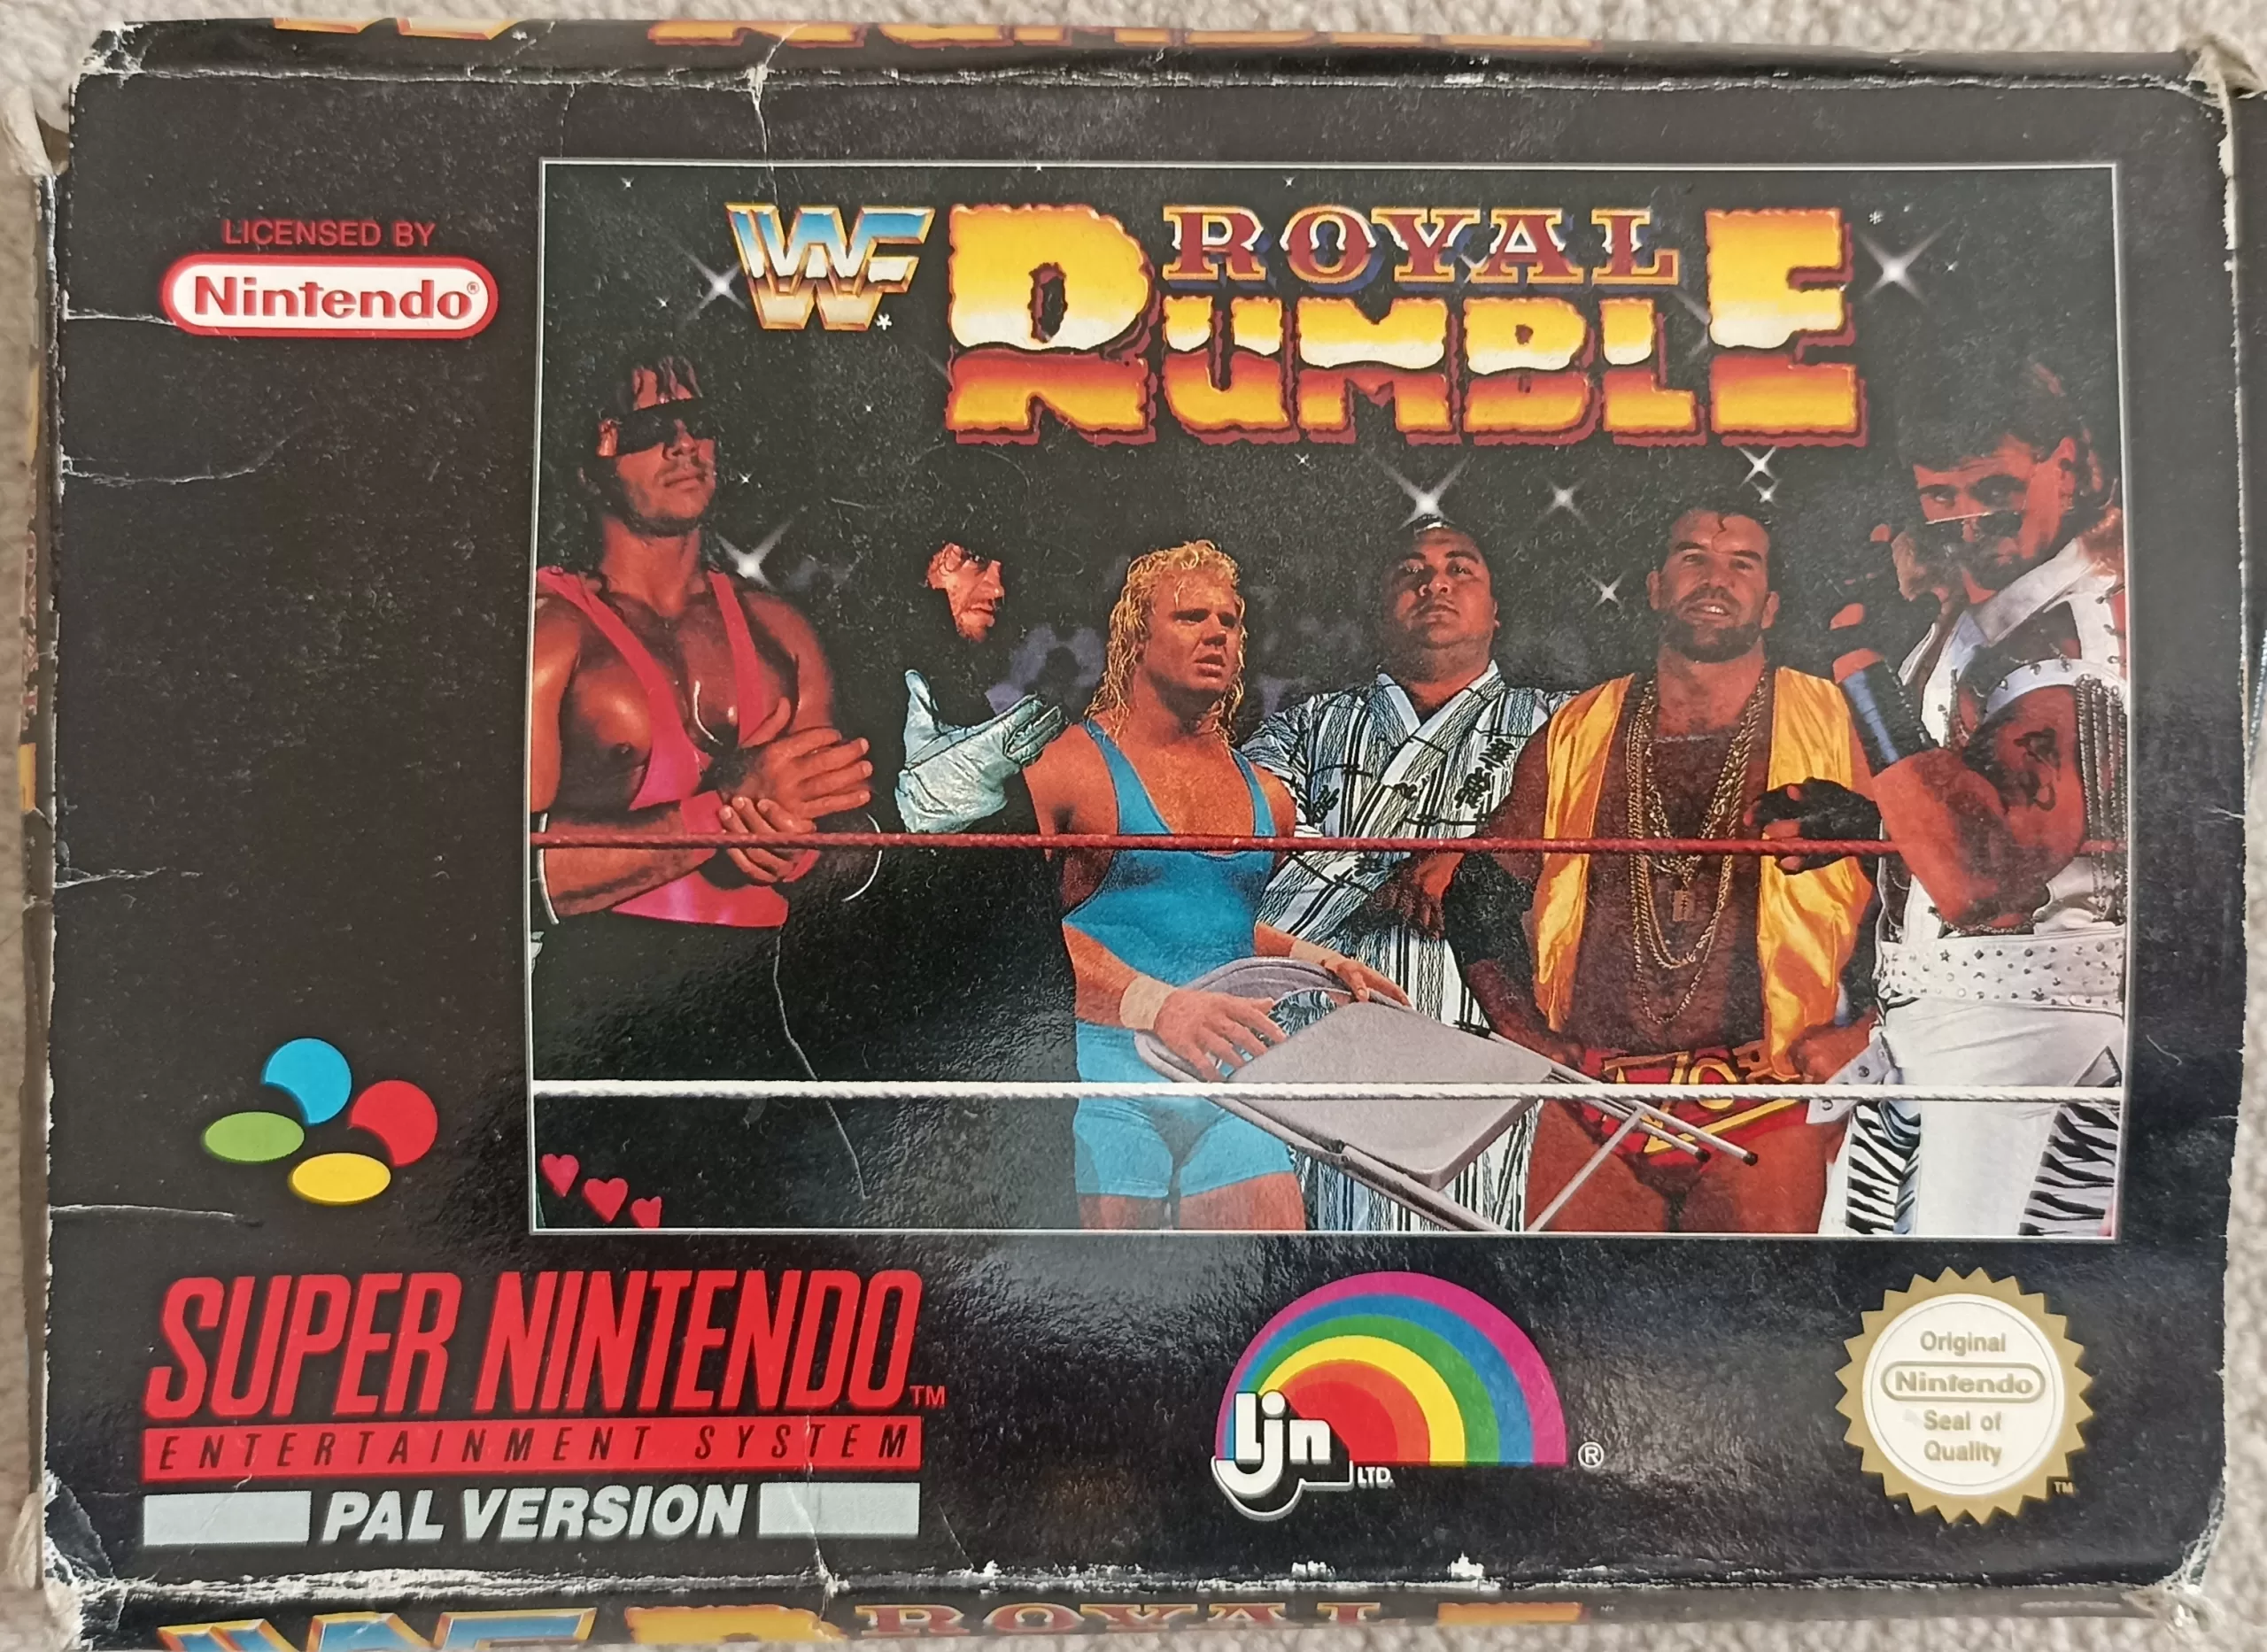 WWF Royal Rumble for Super Nintendo